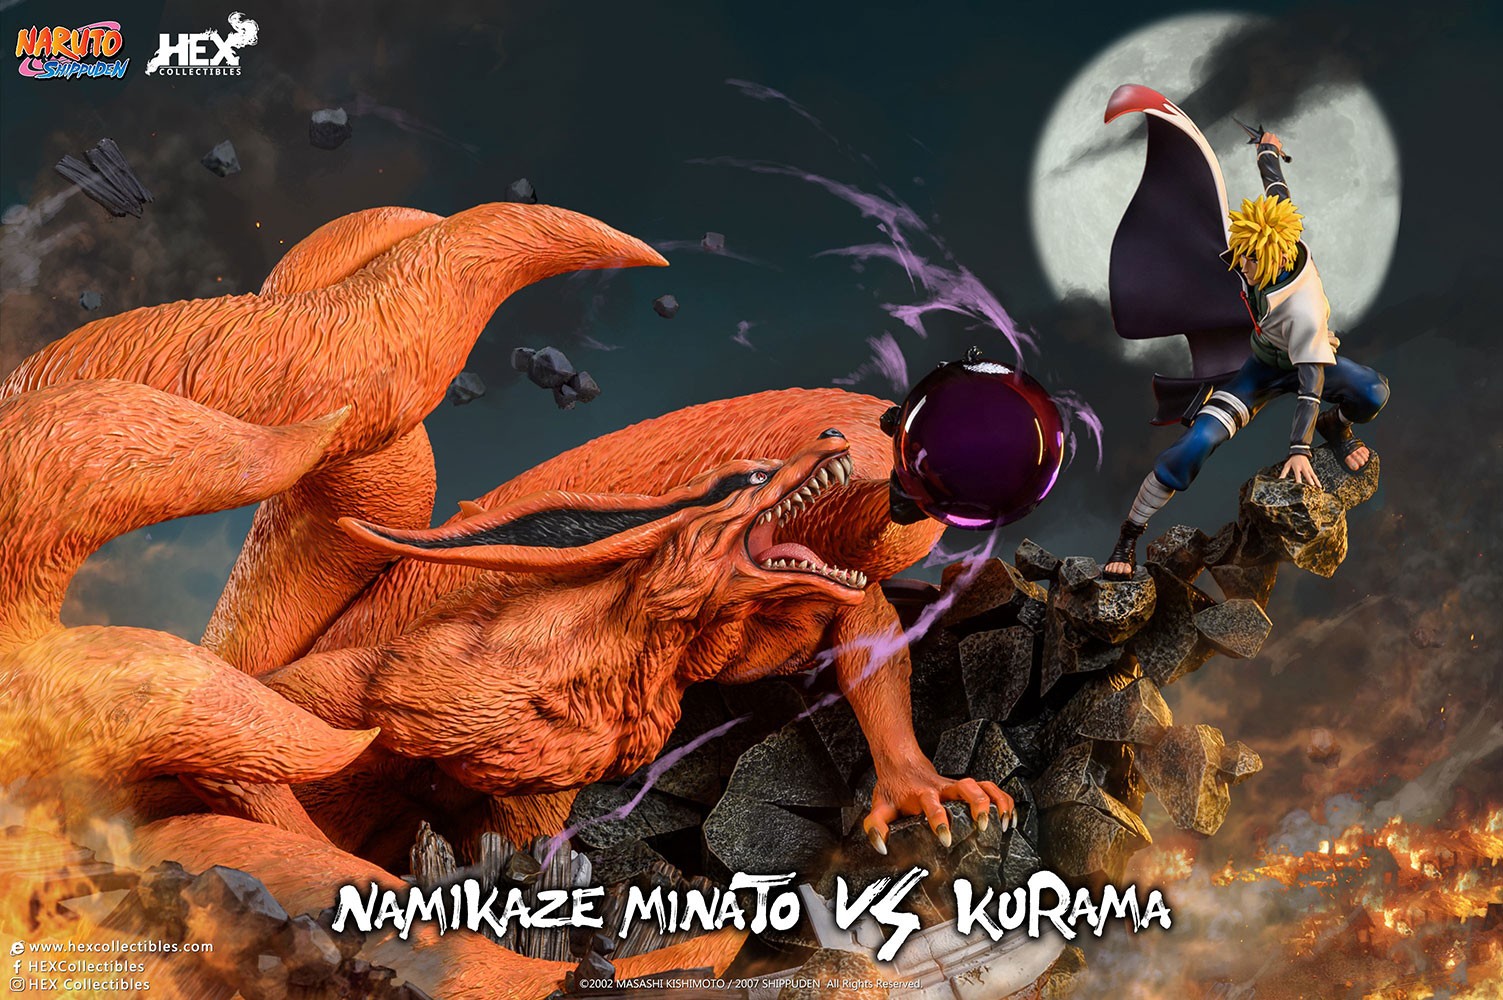 Namikaze Minato vs Kurama- Prototype Shown